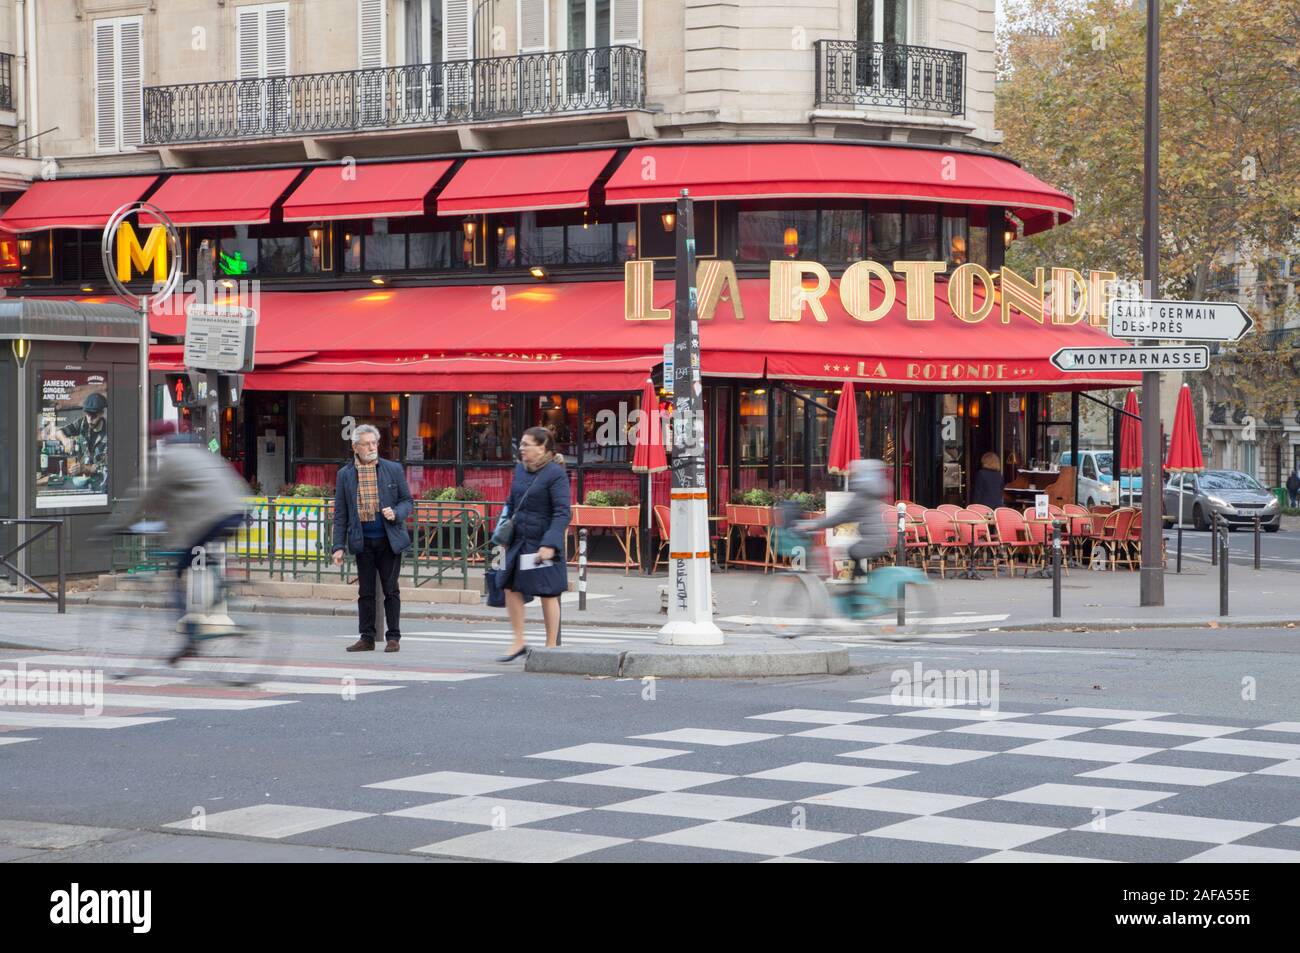 The famous La Rotonde family brasserie and restaurant in Montparnasse, Paris, France Stock Photo